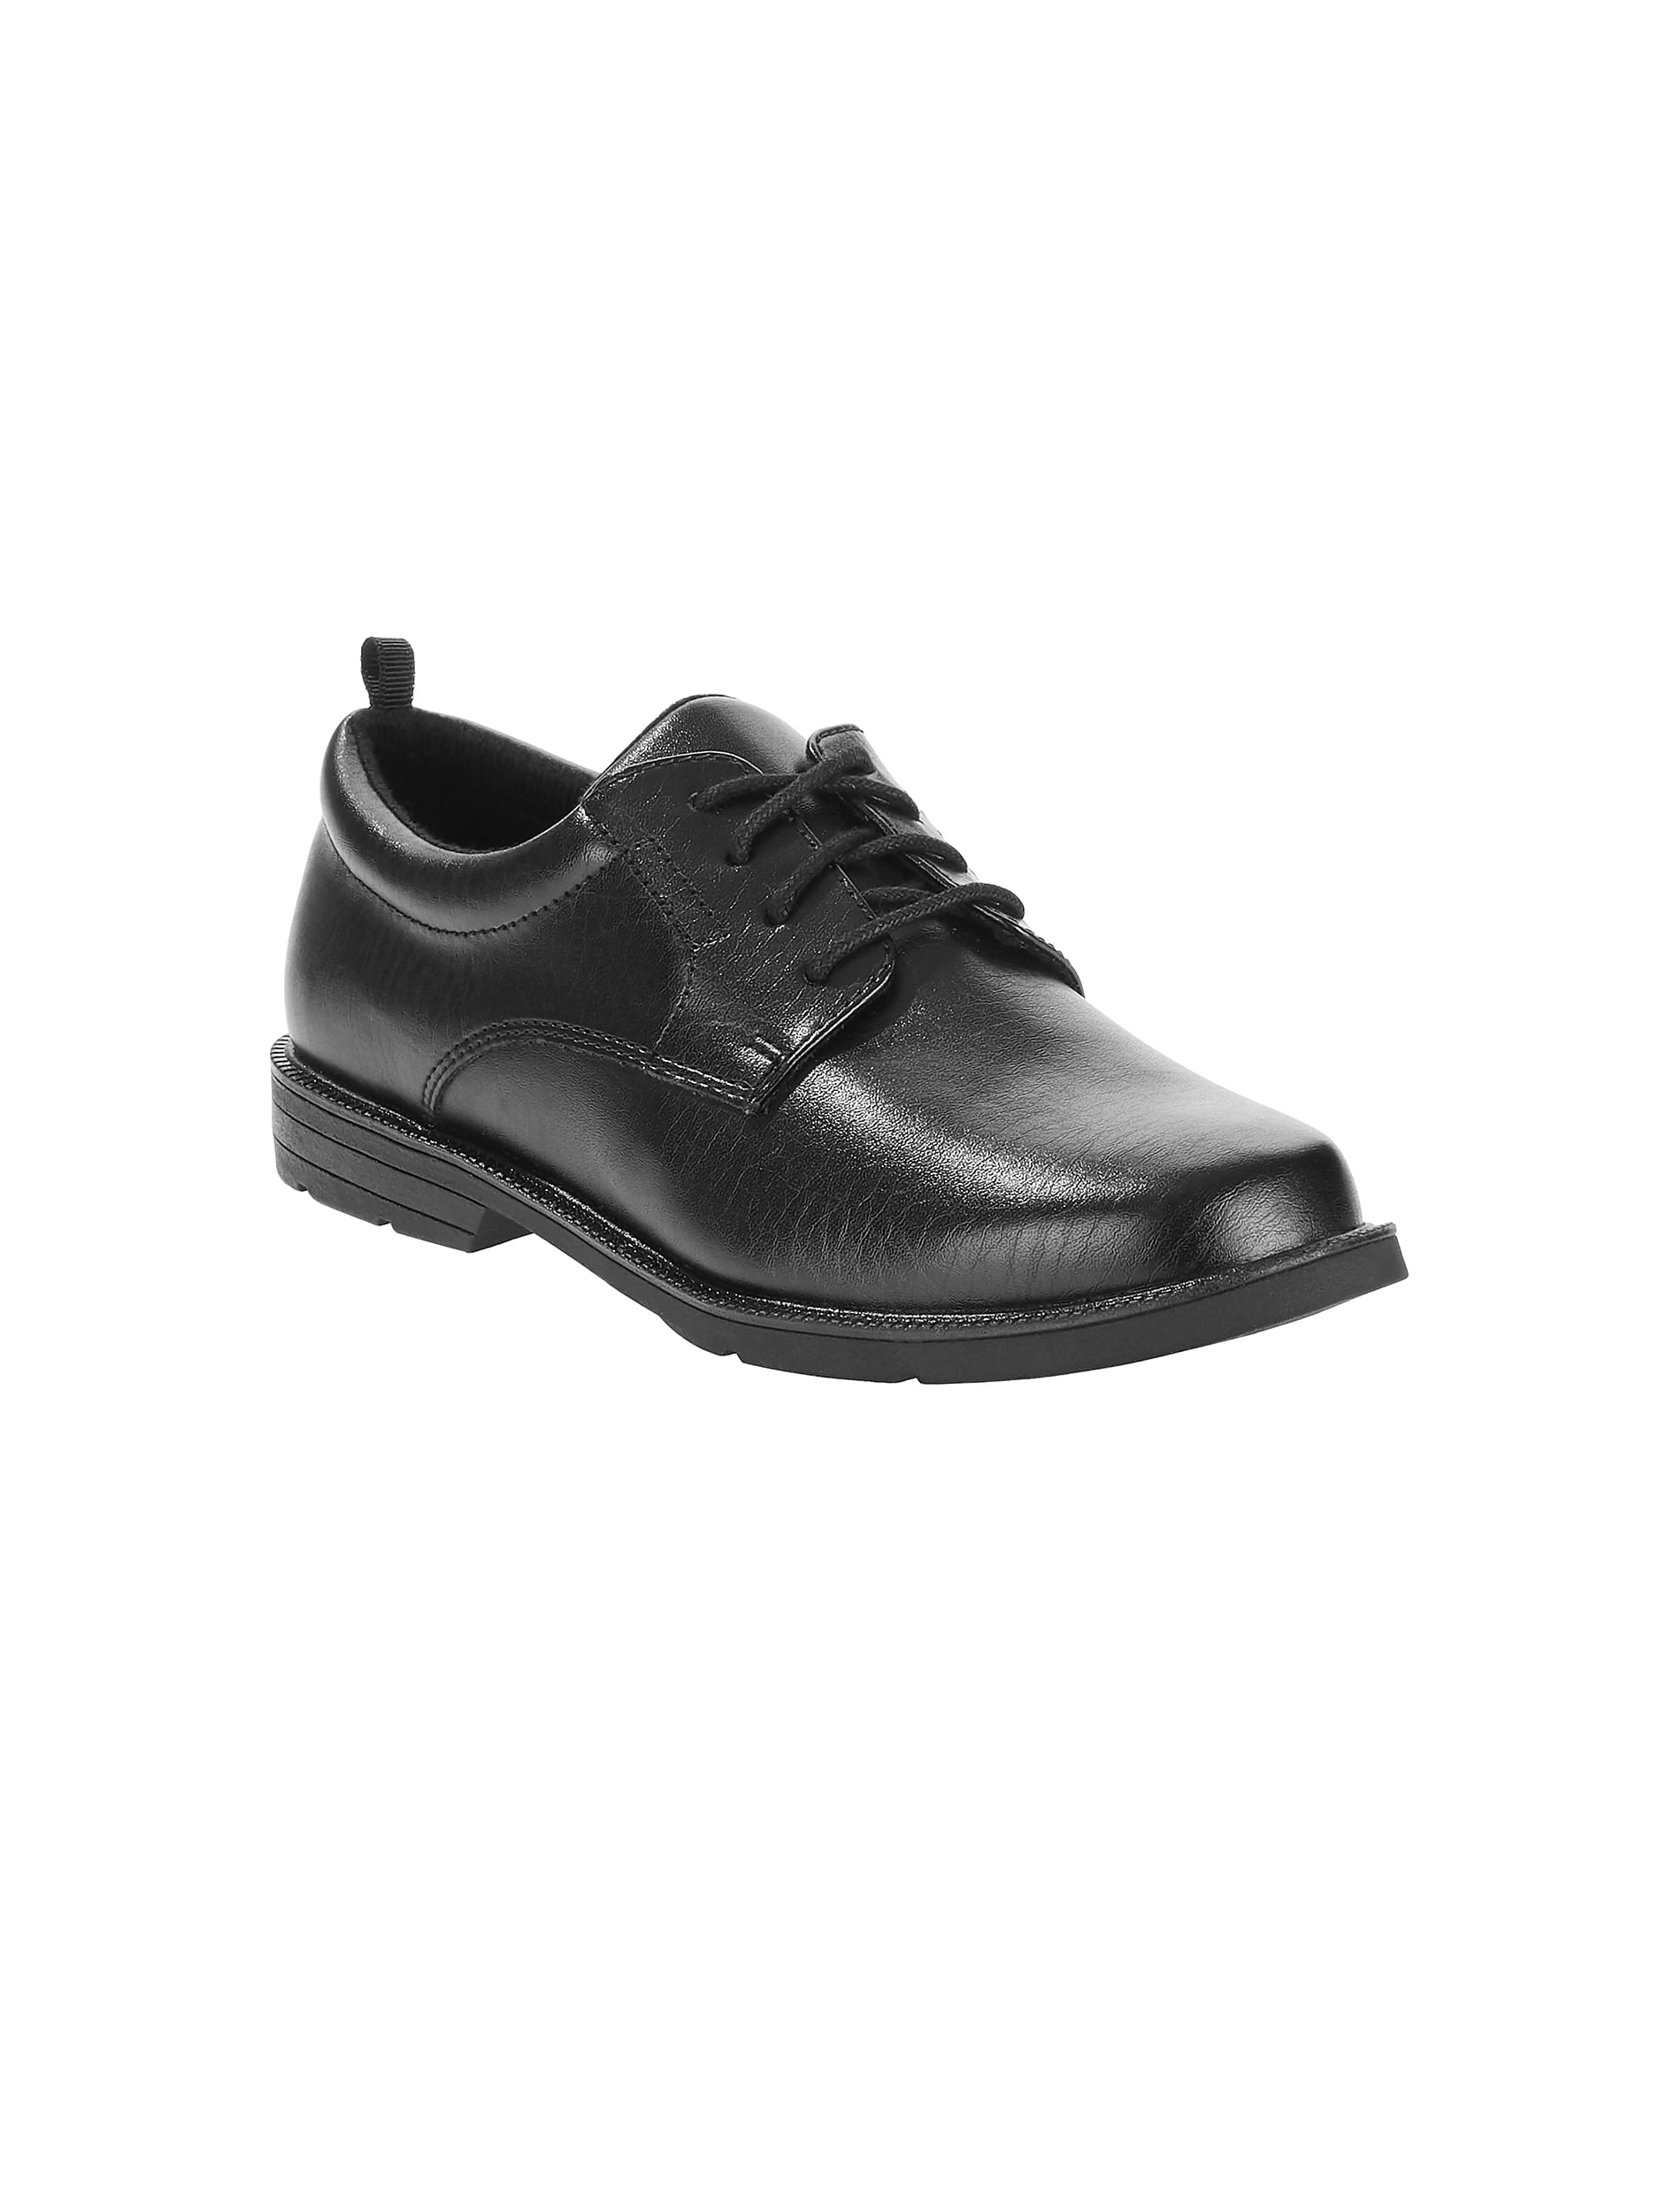 walmart boys black shoes